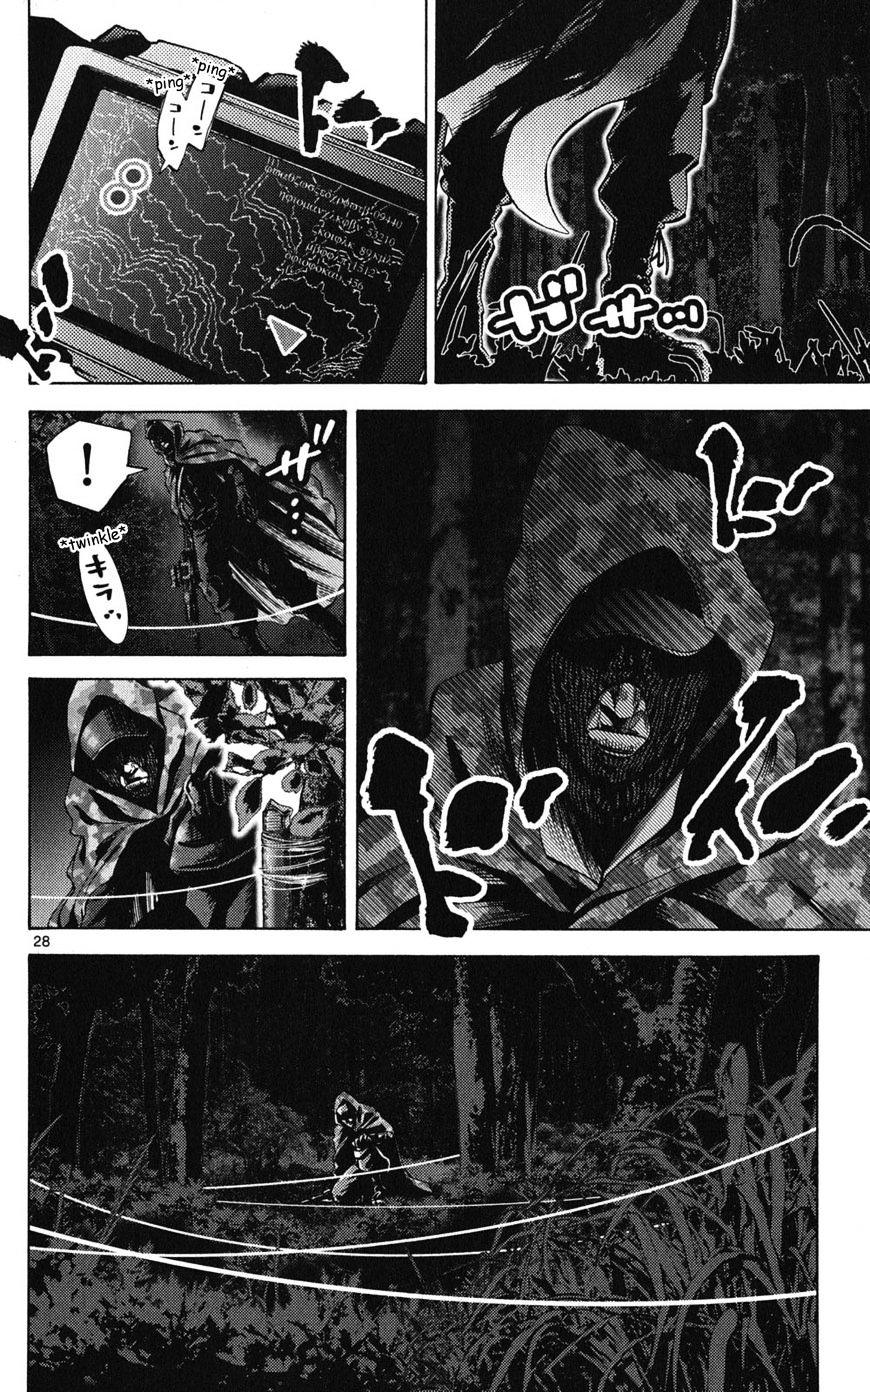 Imawa No Kuni No Alice Chapter 49.2 : Side Story 5 - King Of Spades (2) page 28 - Mangakakalot